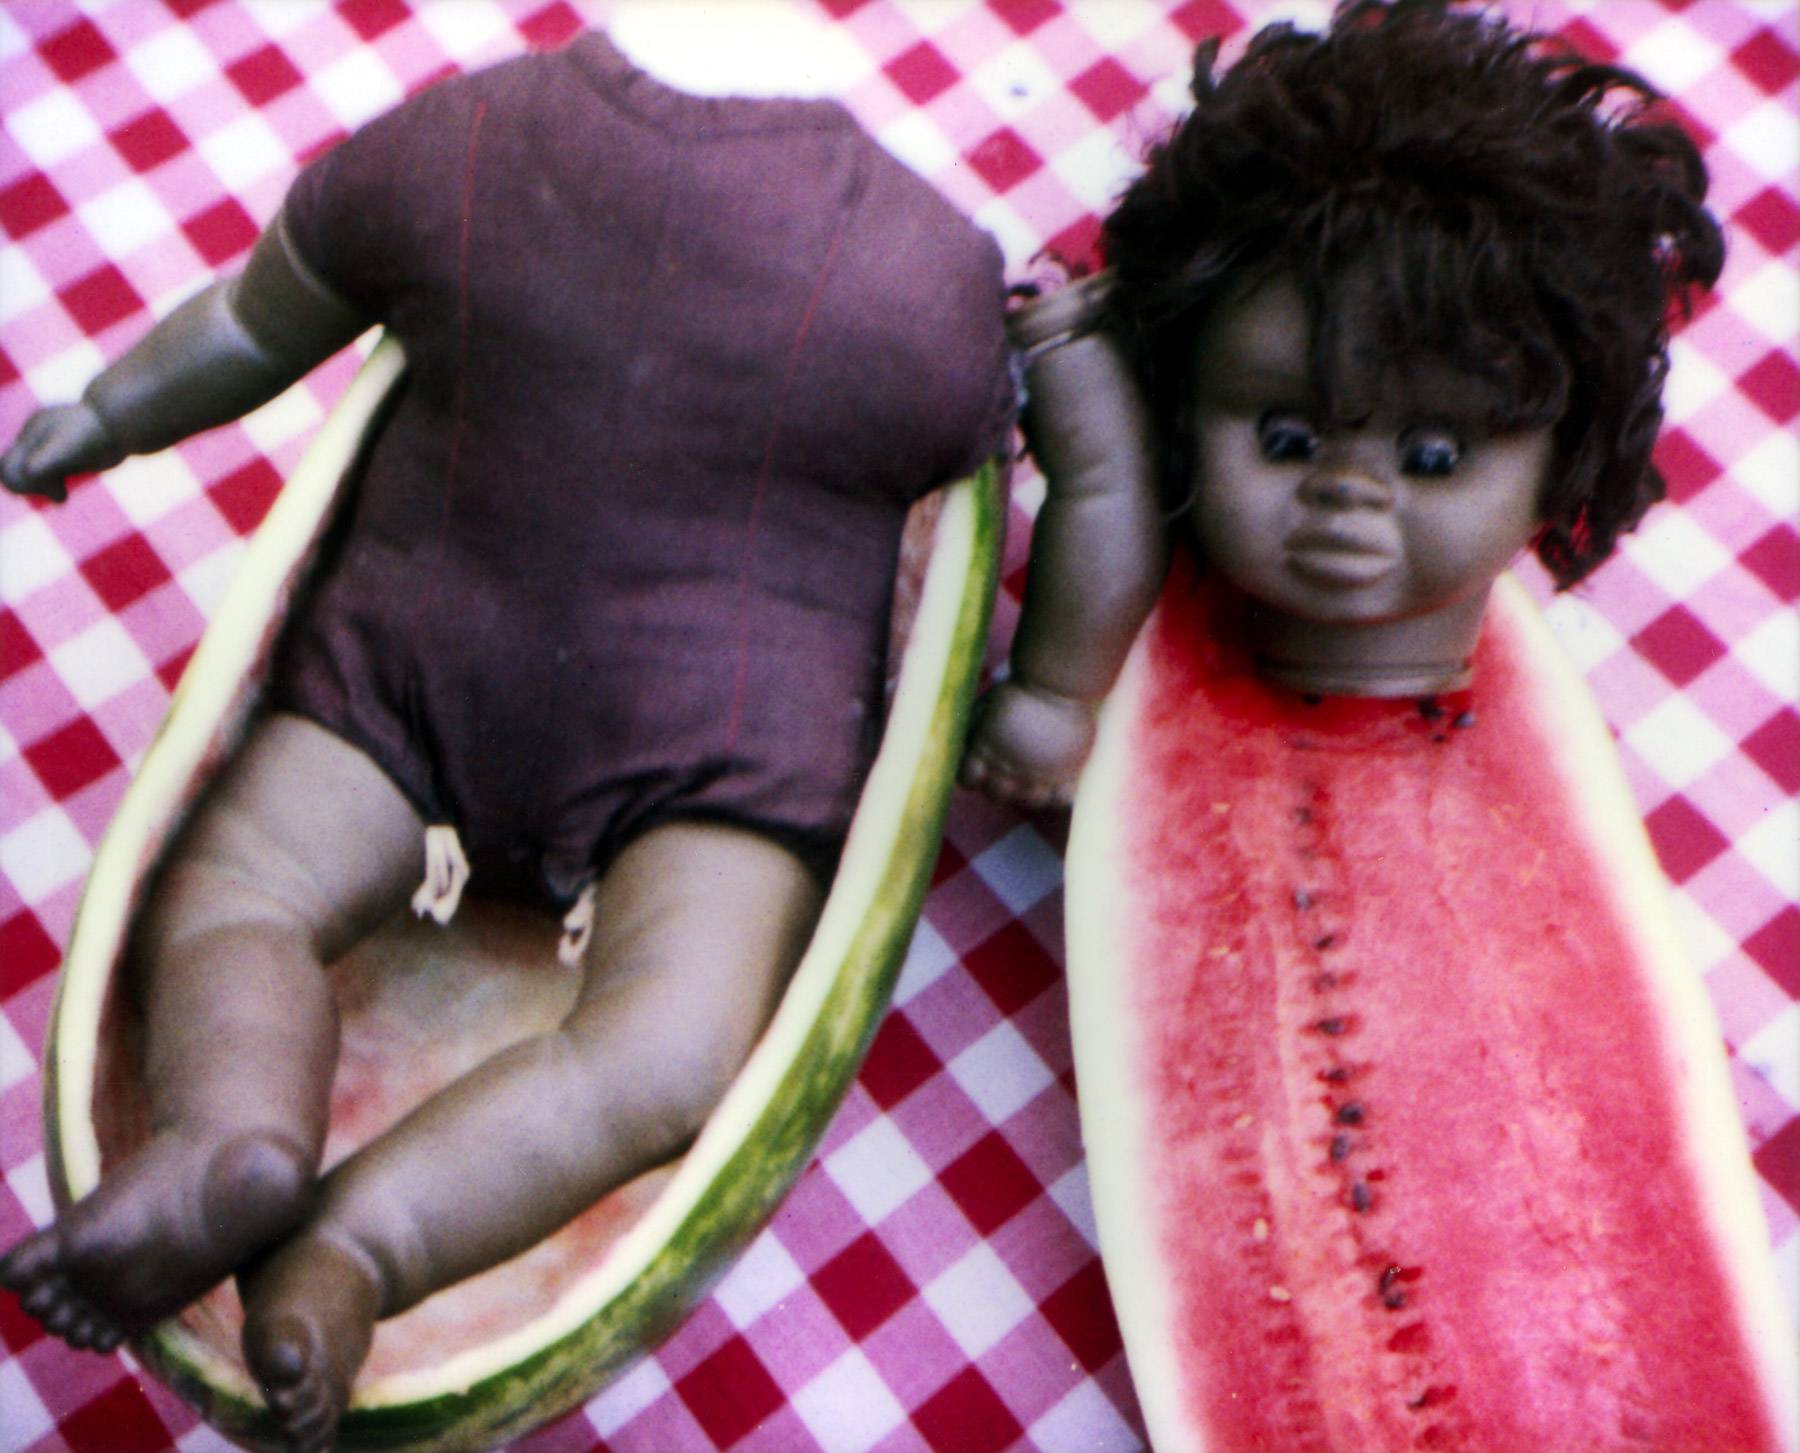 aboriginal baby dolls